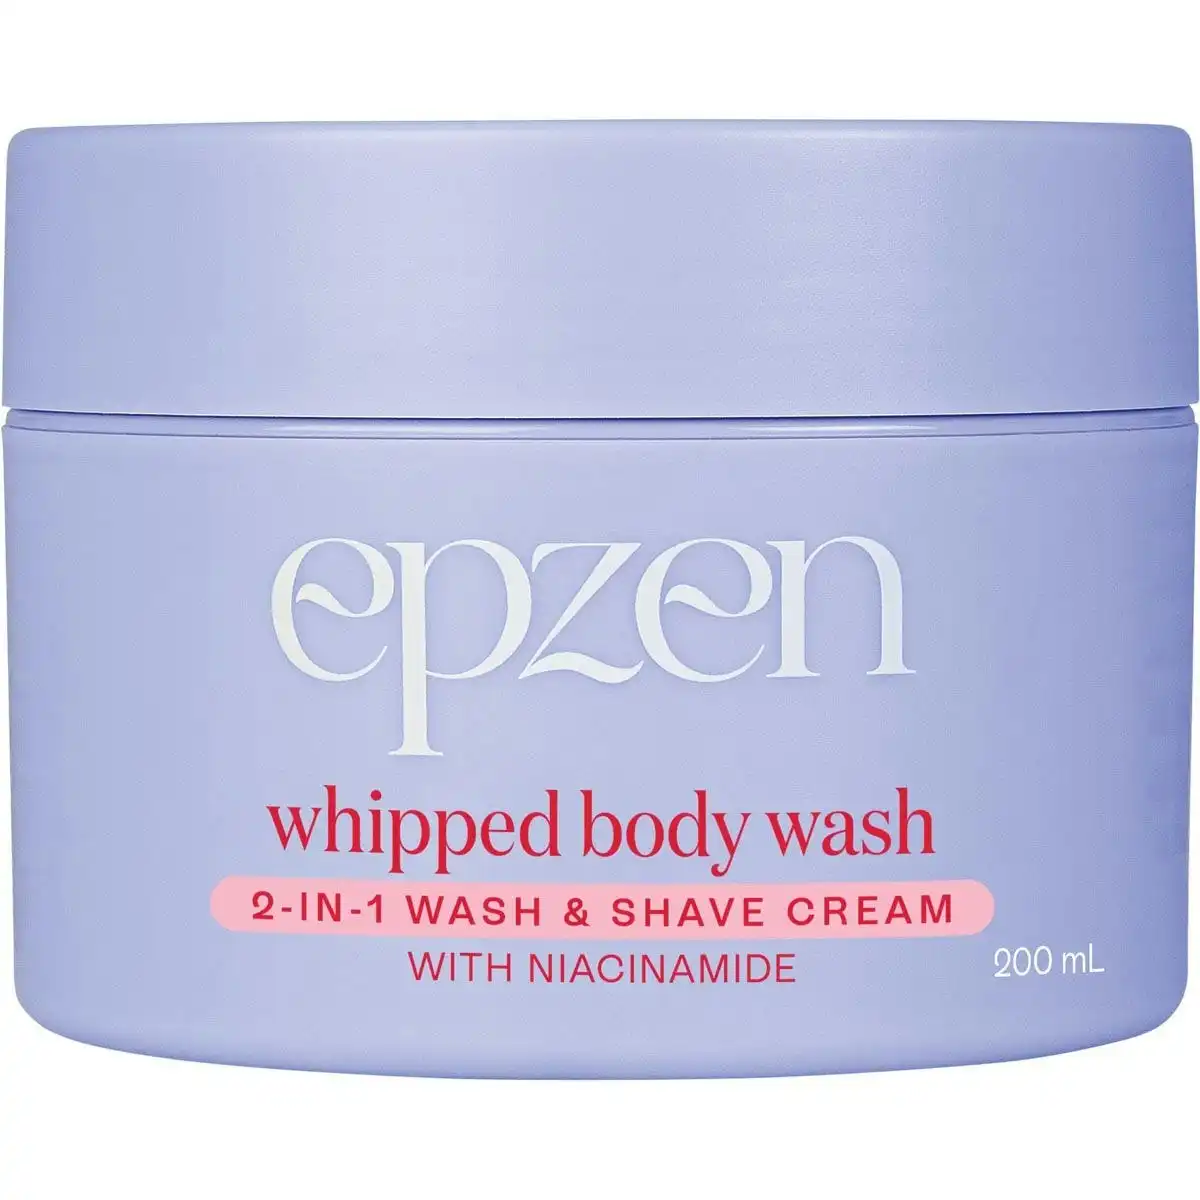 EpZen Whipped Body Wash 2-in-1 Wash & Shave Cream 200ml